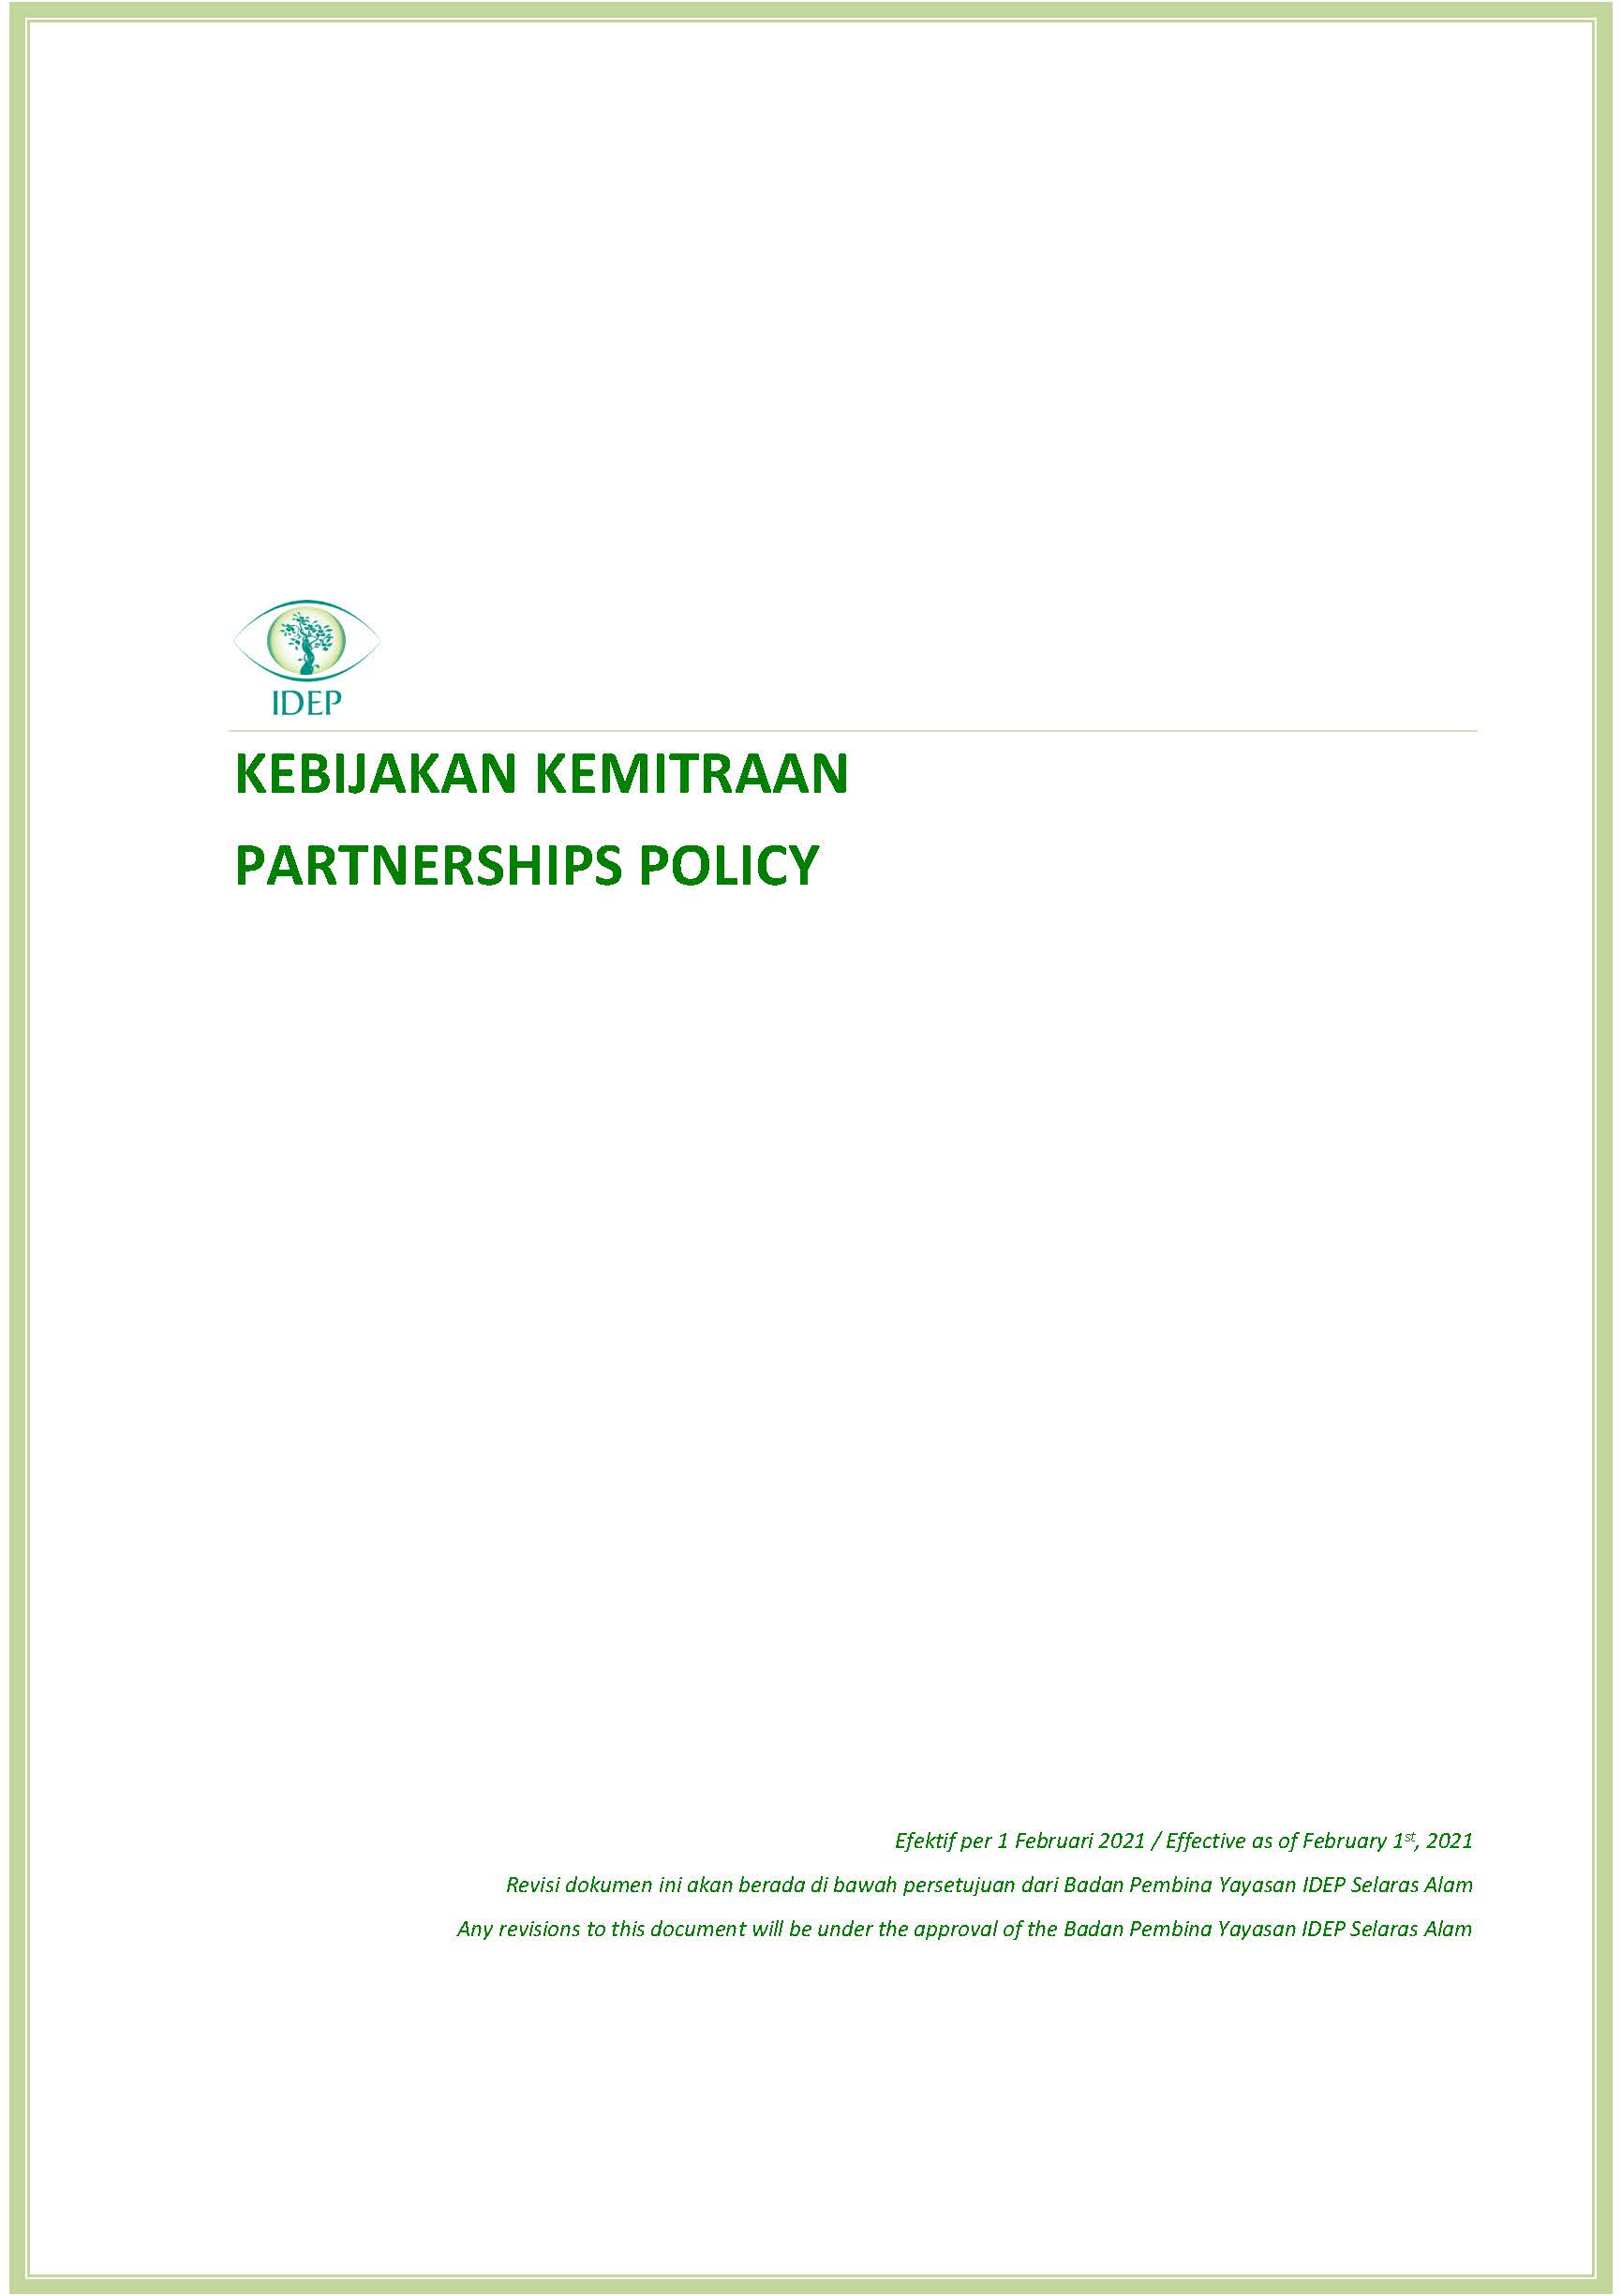 idep partnerships policy